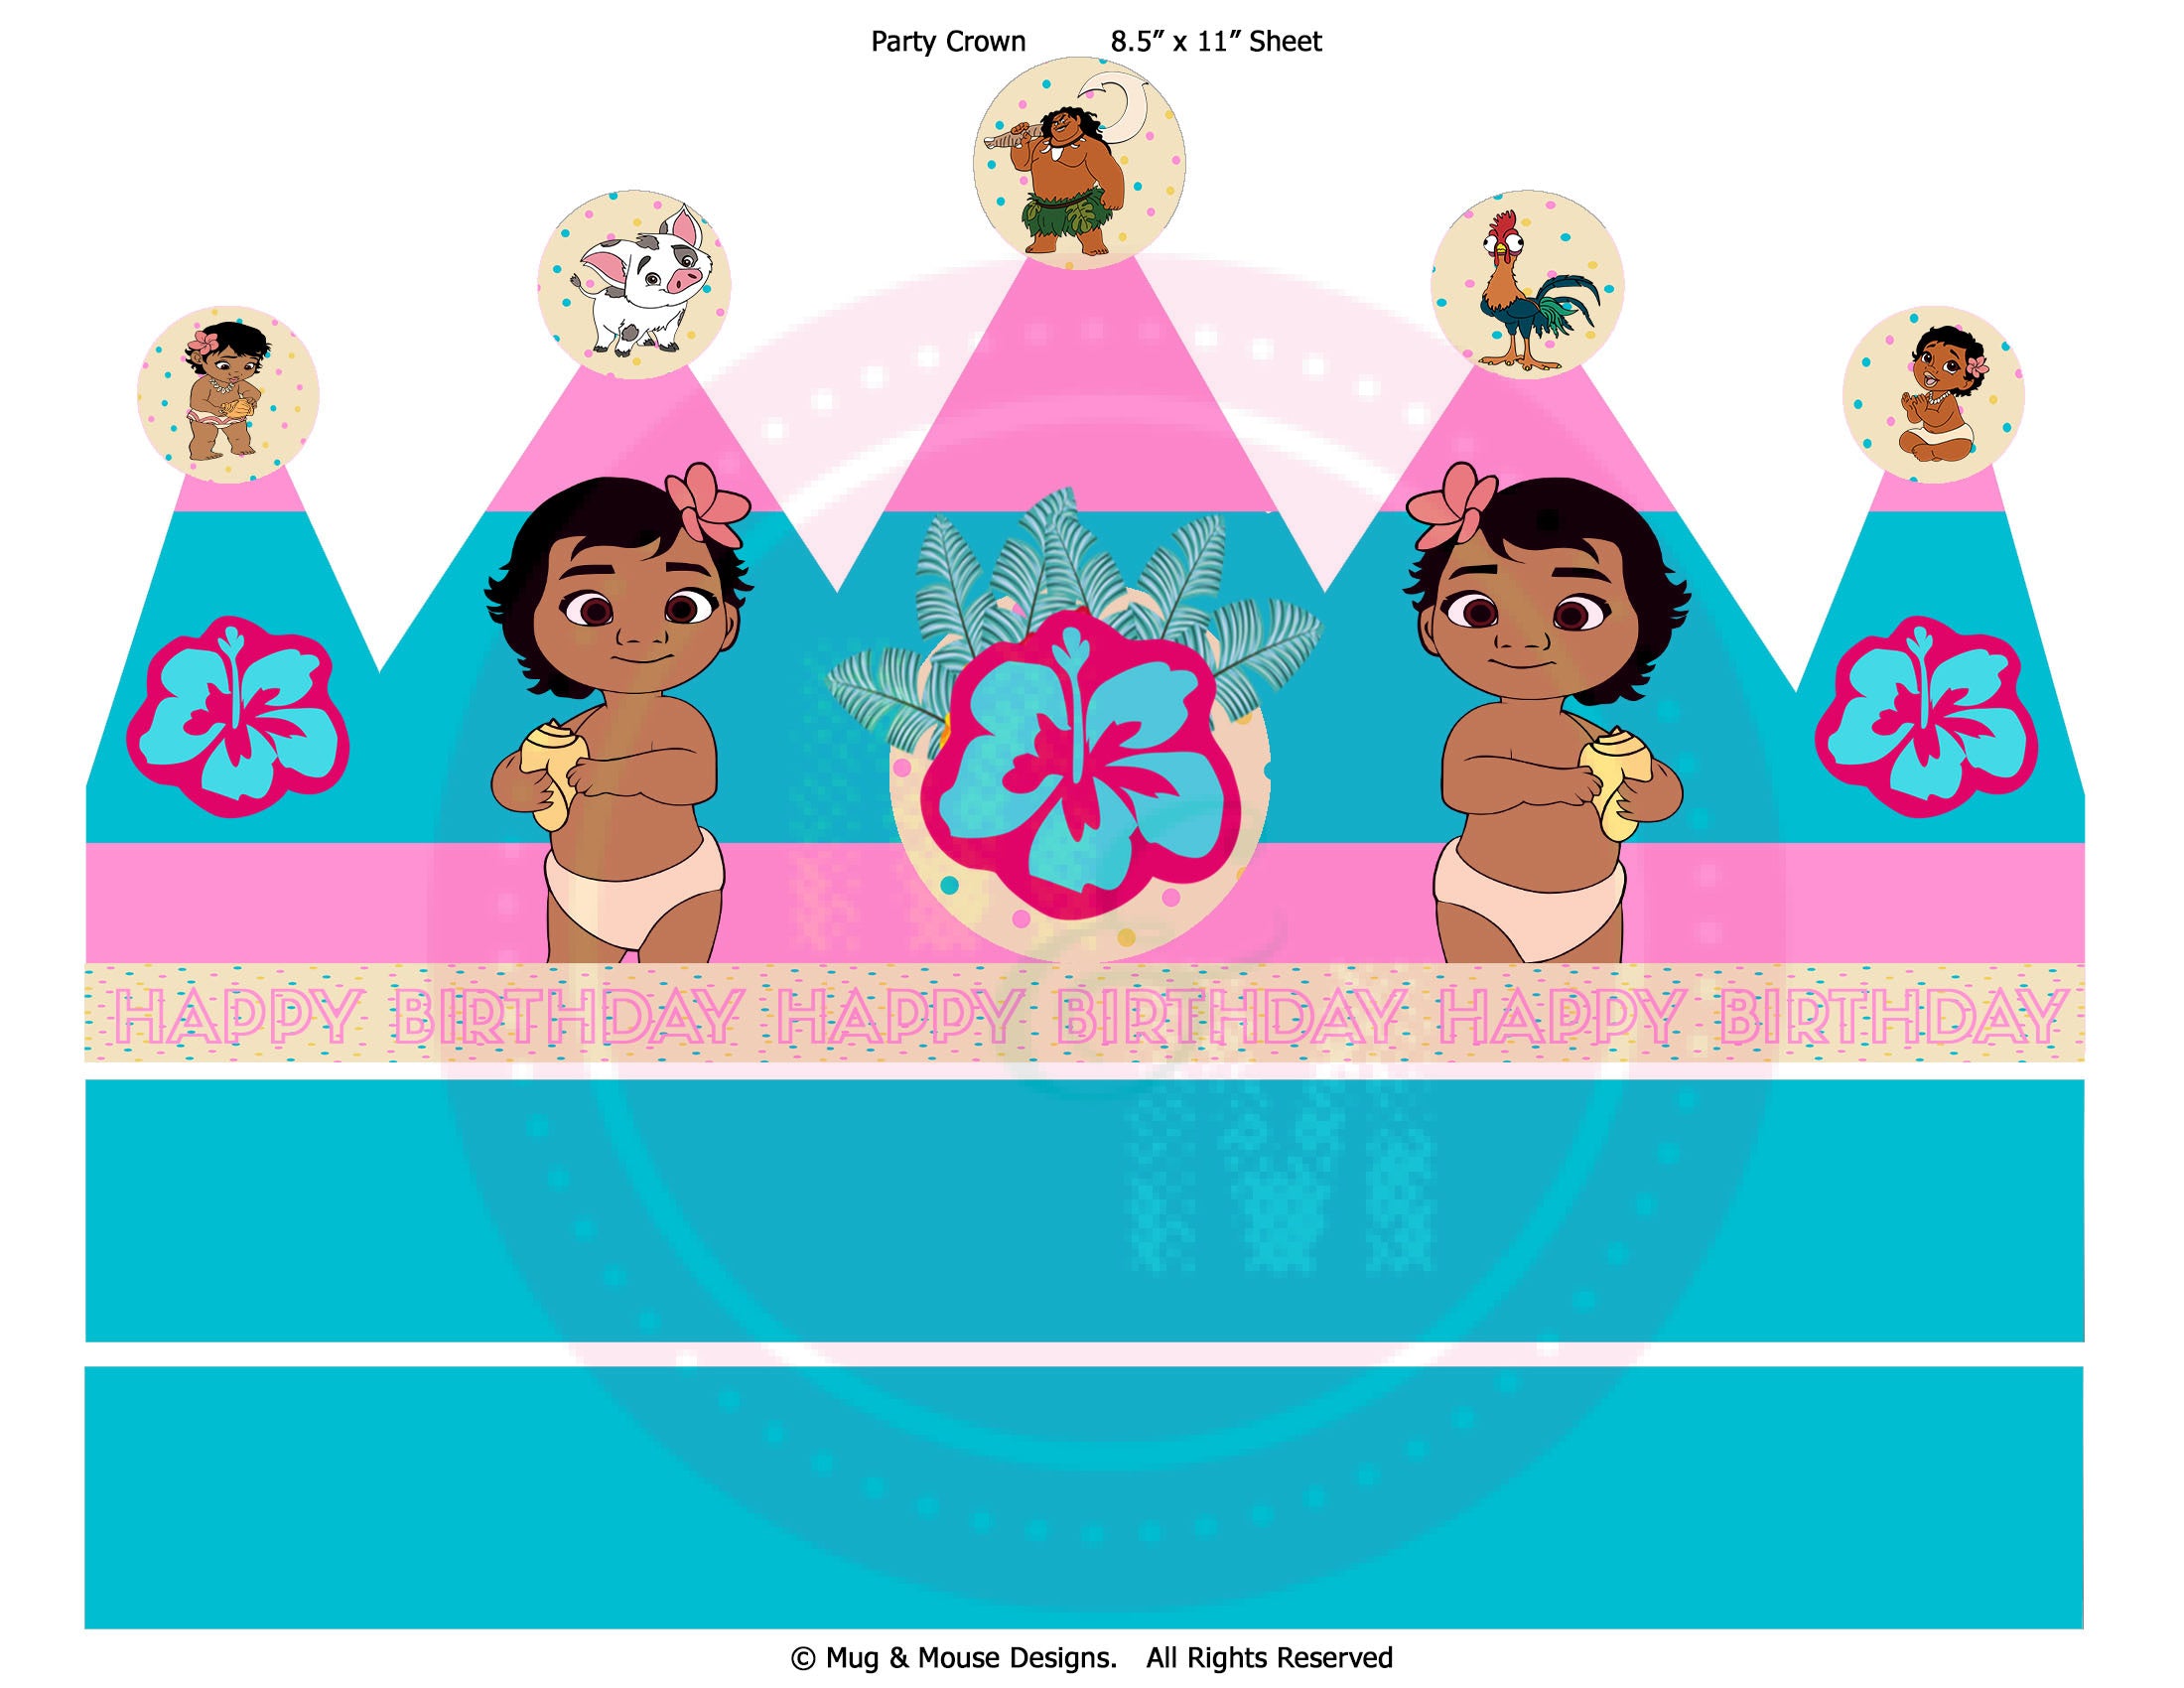 Instant Download Ocean Princess Paper Birthday Crown Printable, Princess Moana Crown, Ocean Princess-Party Hat, Ocean Princess Decorations